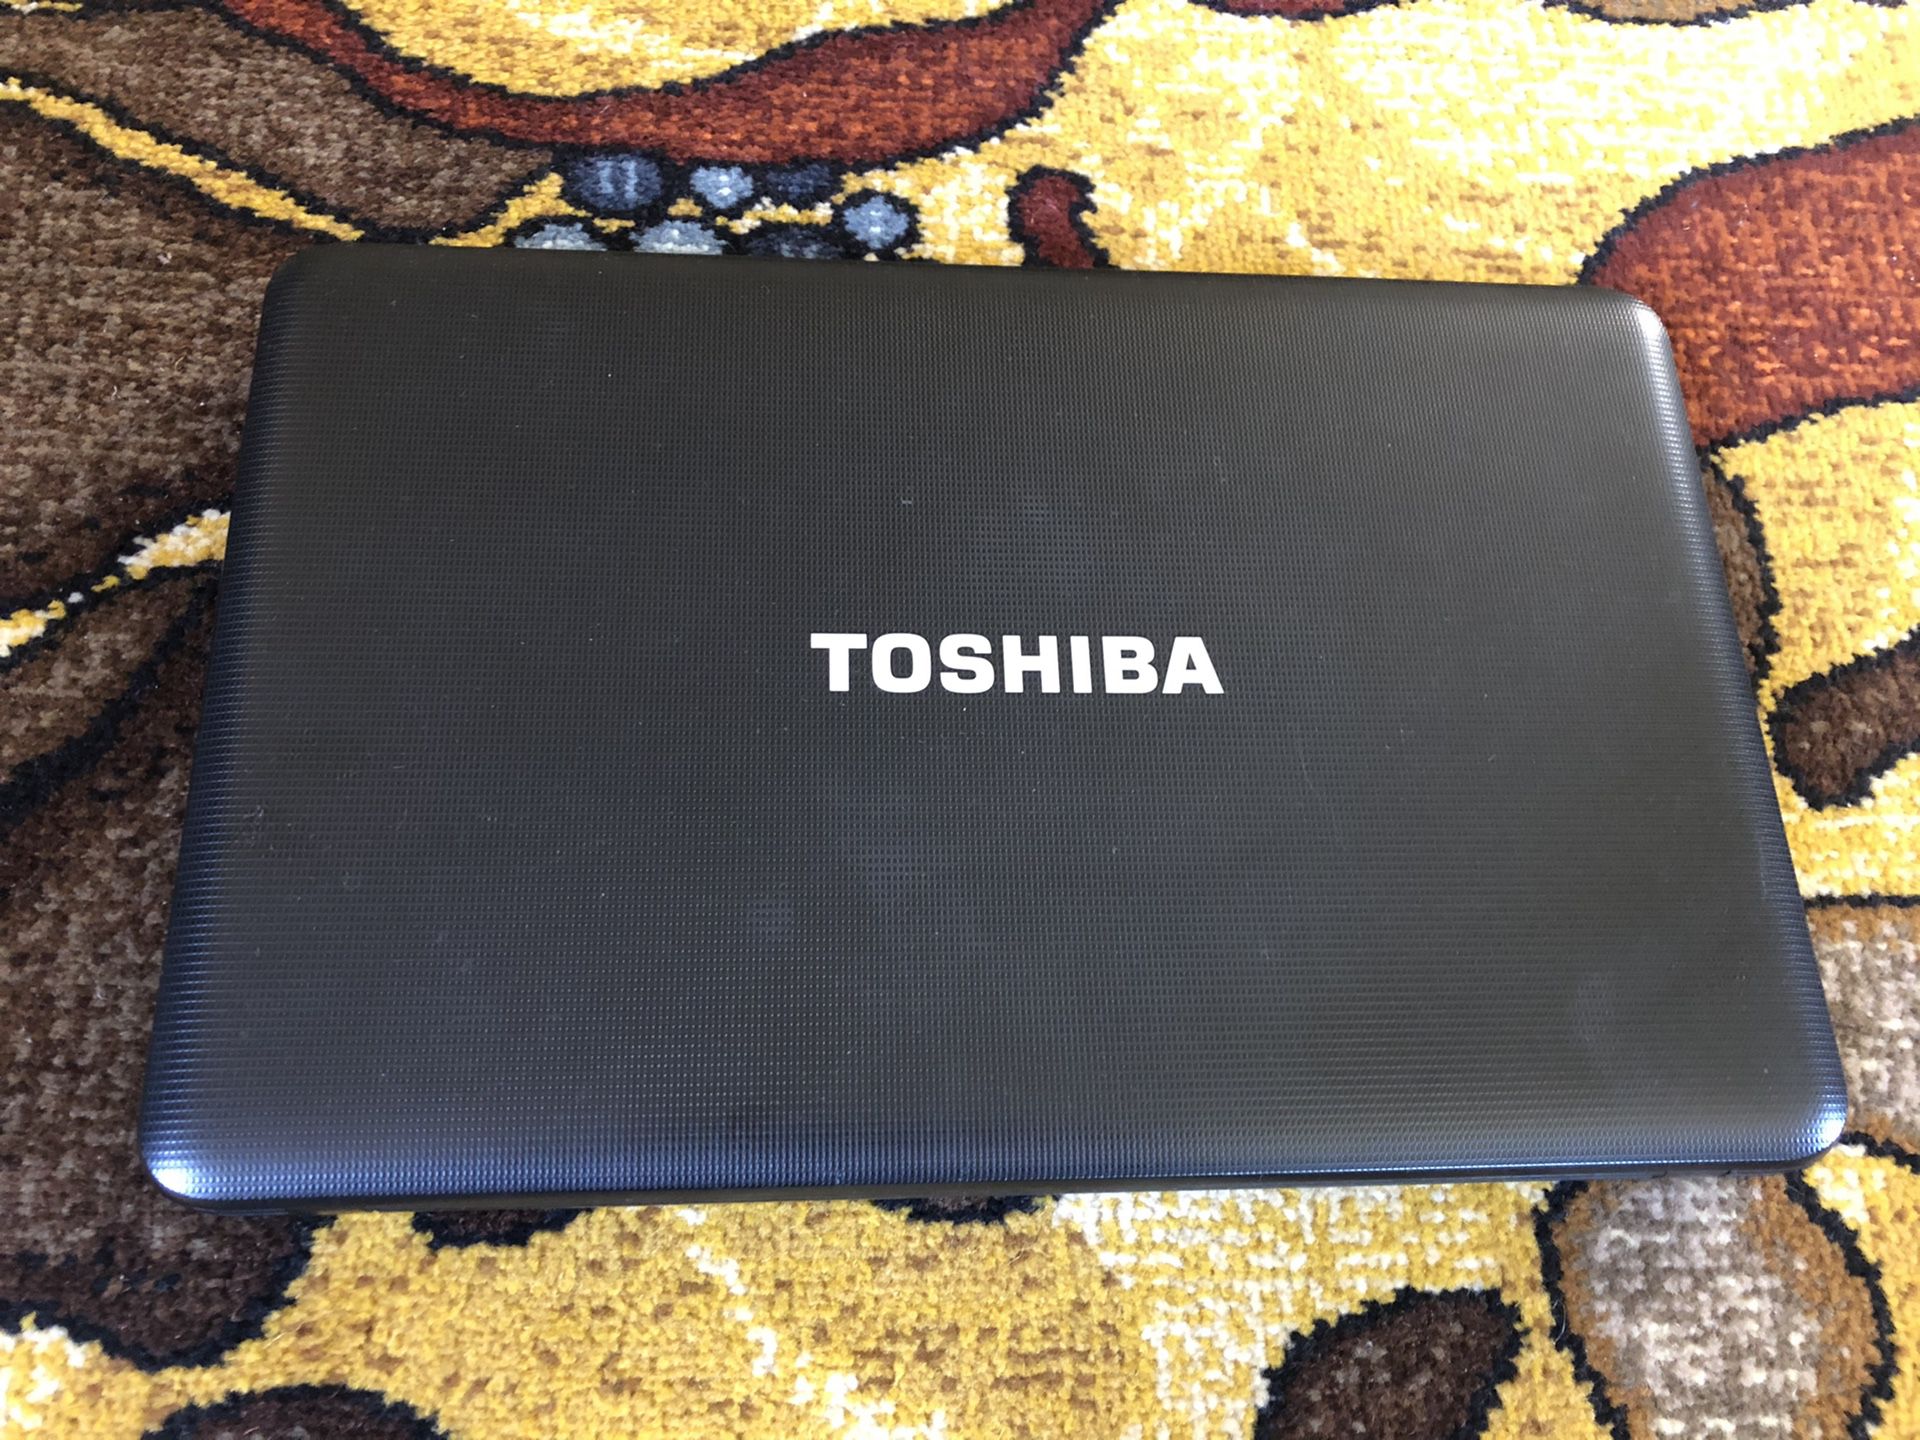 Toshiba Laptop Computer 15.6 inch screen